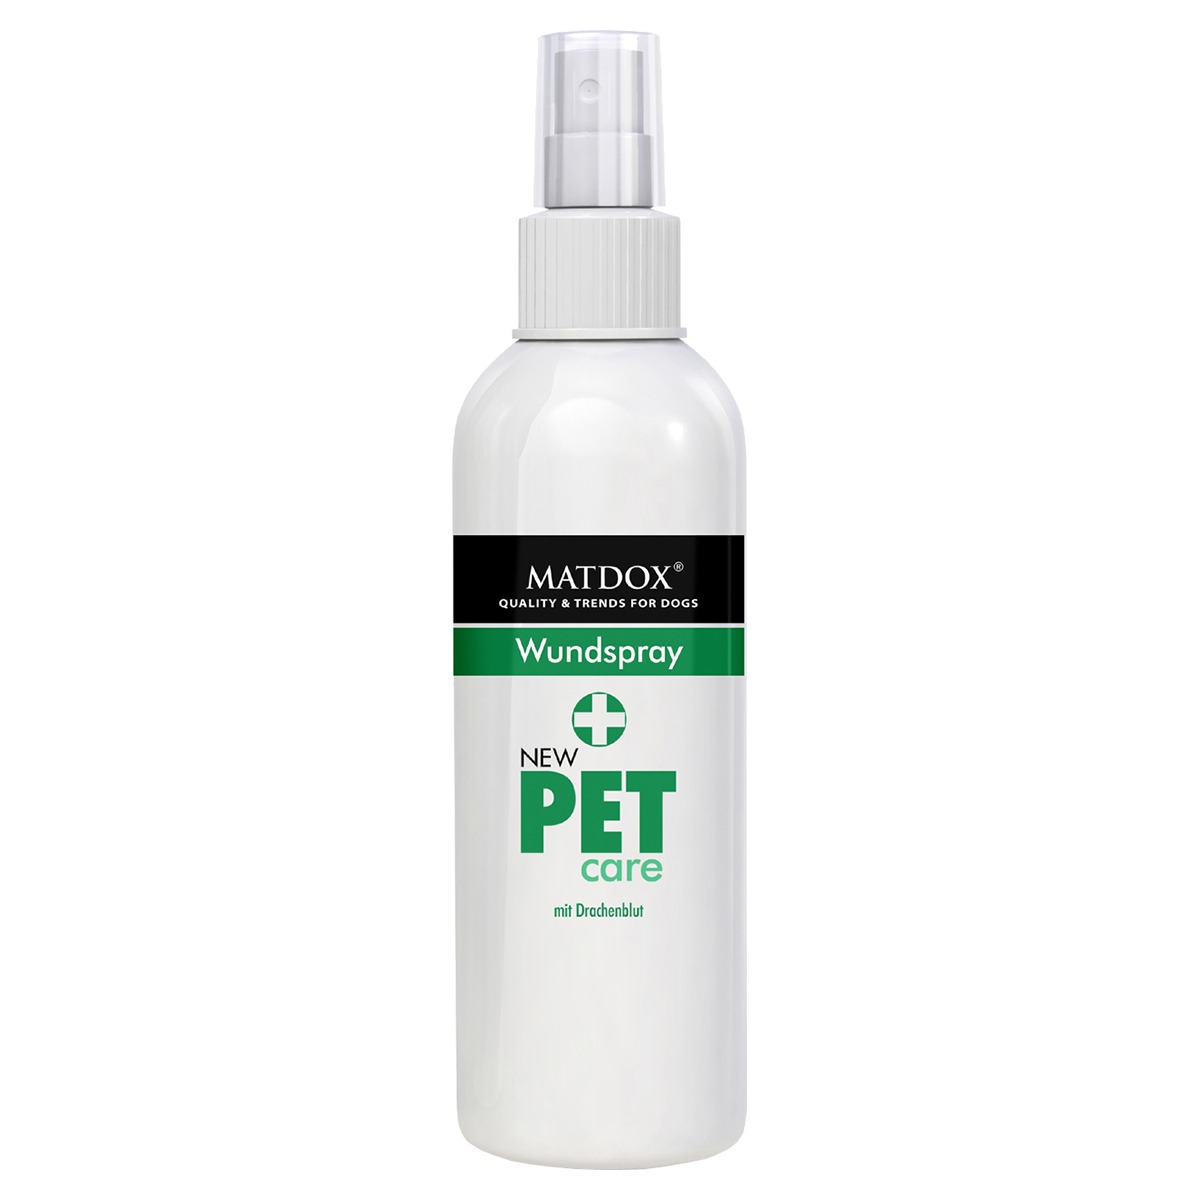 MATDOX New PET care Wundspray 100 ml